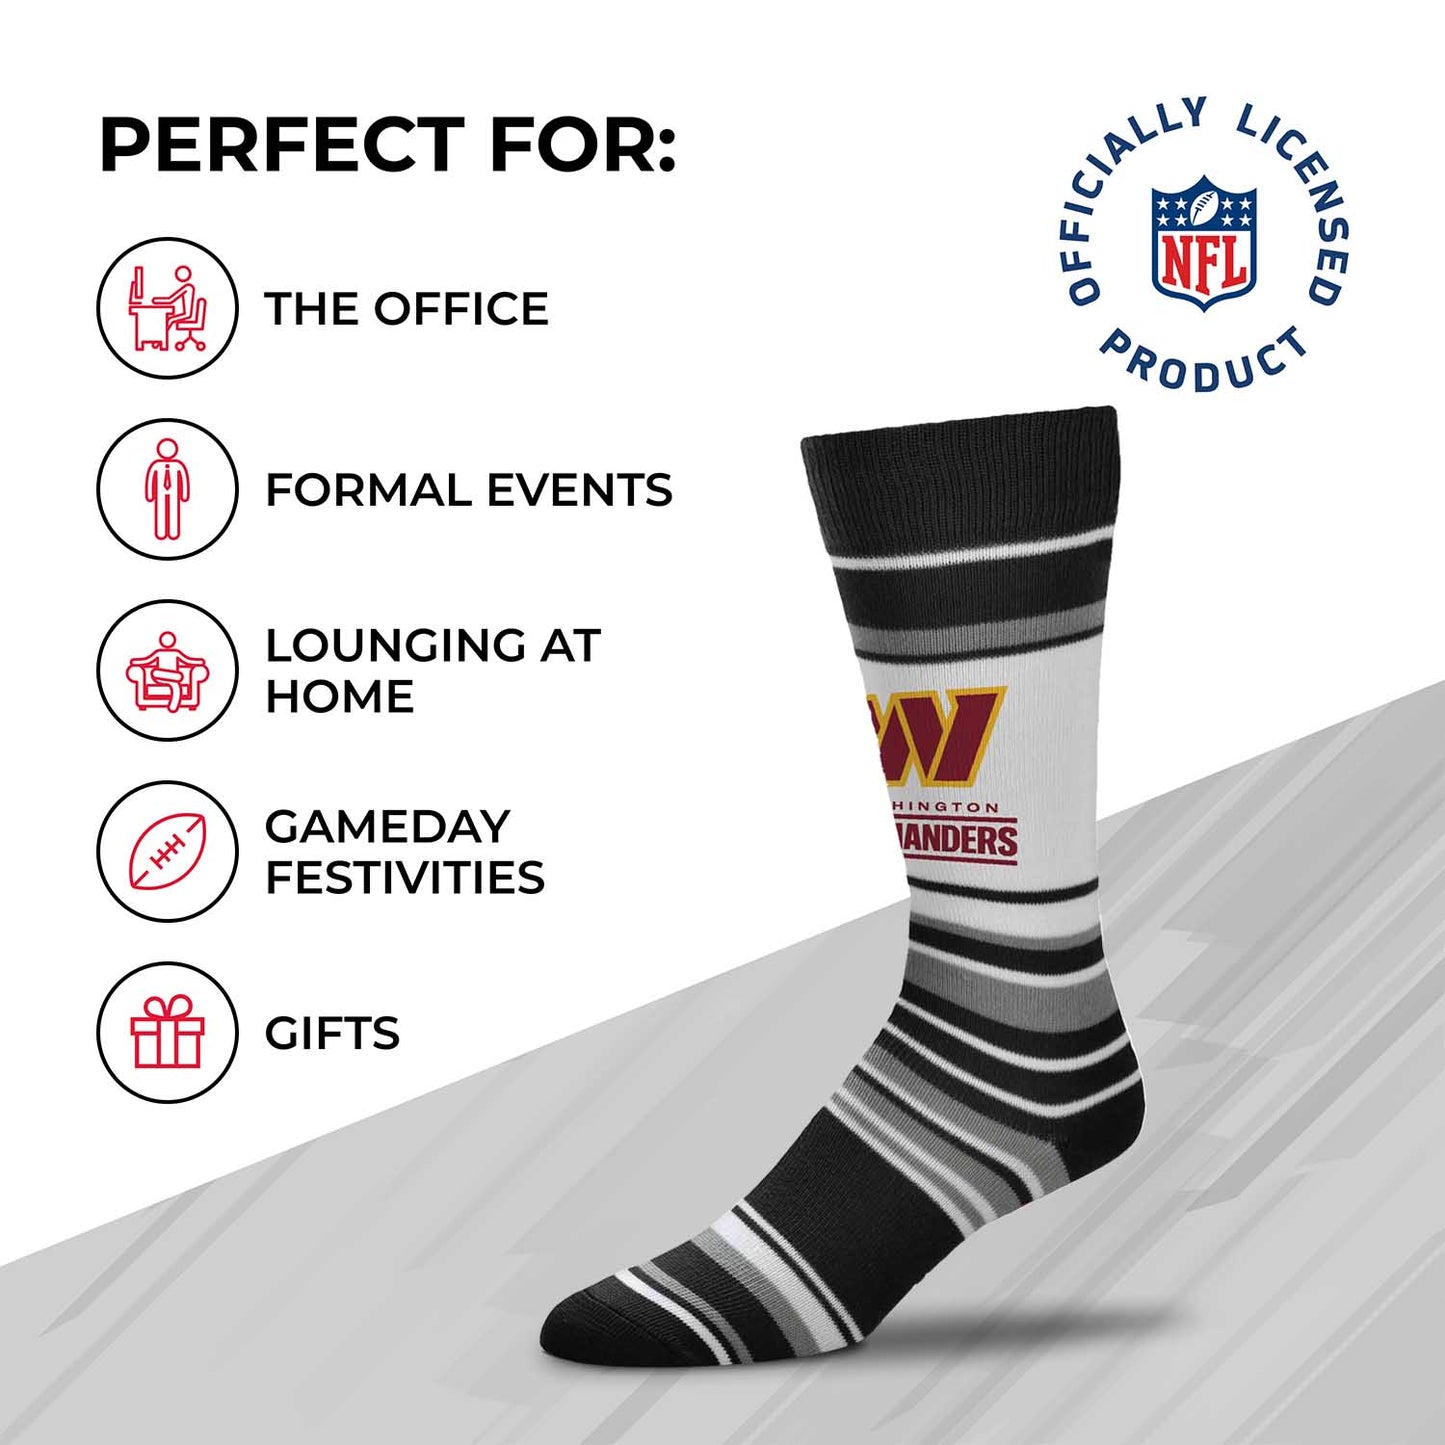 Washington Commanders NFL Adult Striped Dress Socks - Black